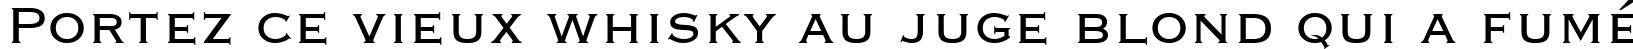 Пример написания шрифтом Copperplate Gothic BT текста на французском